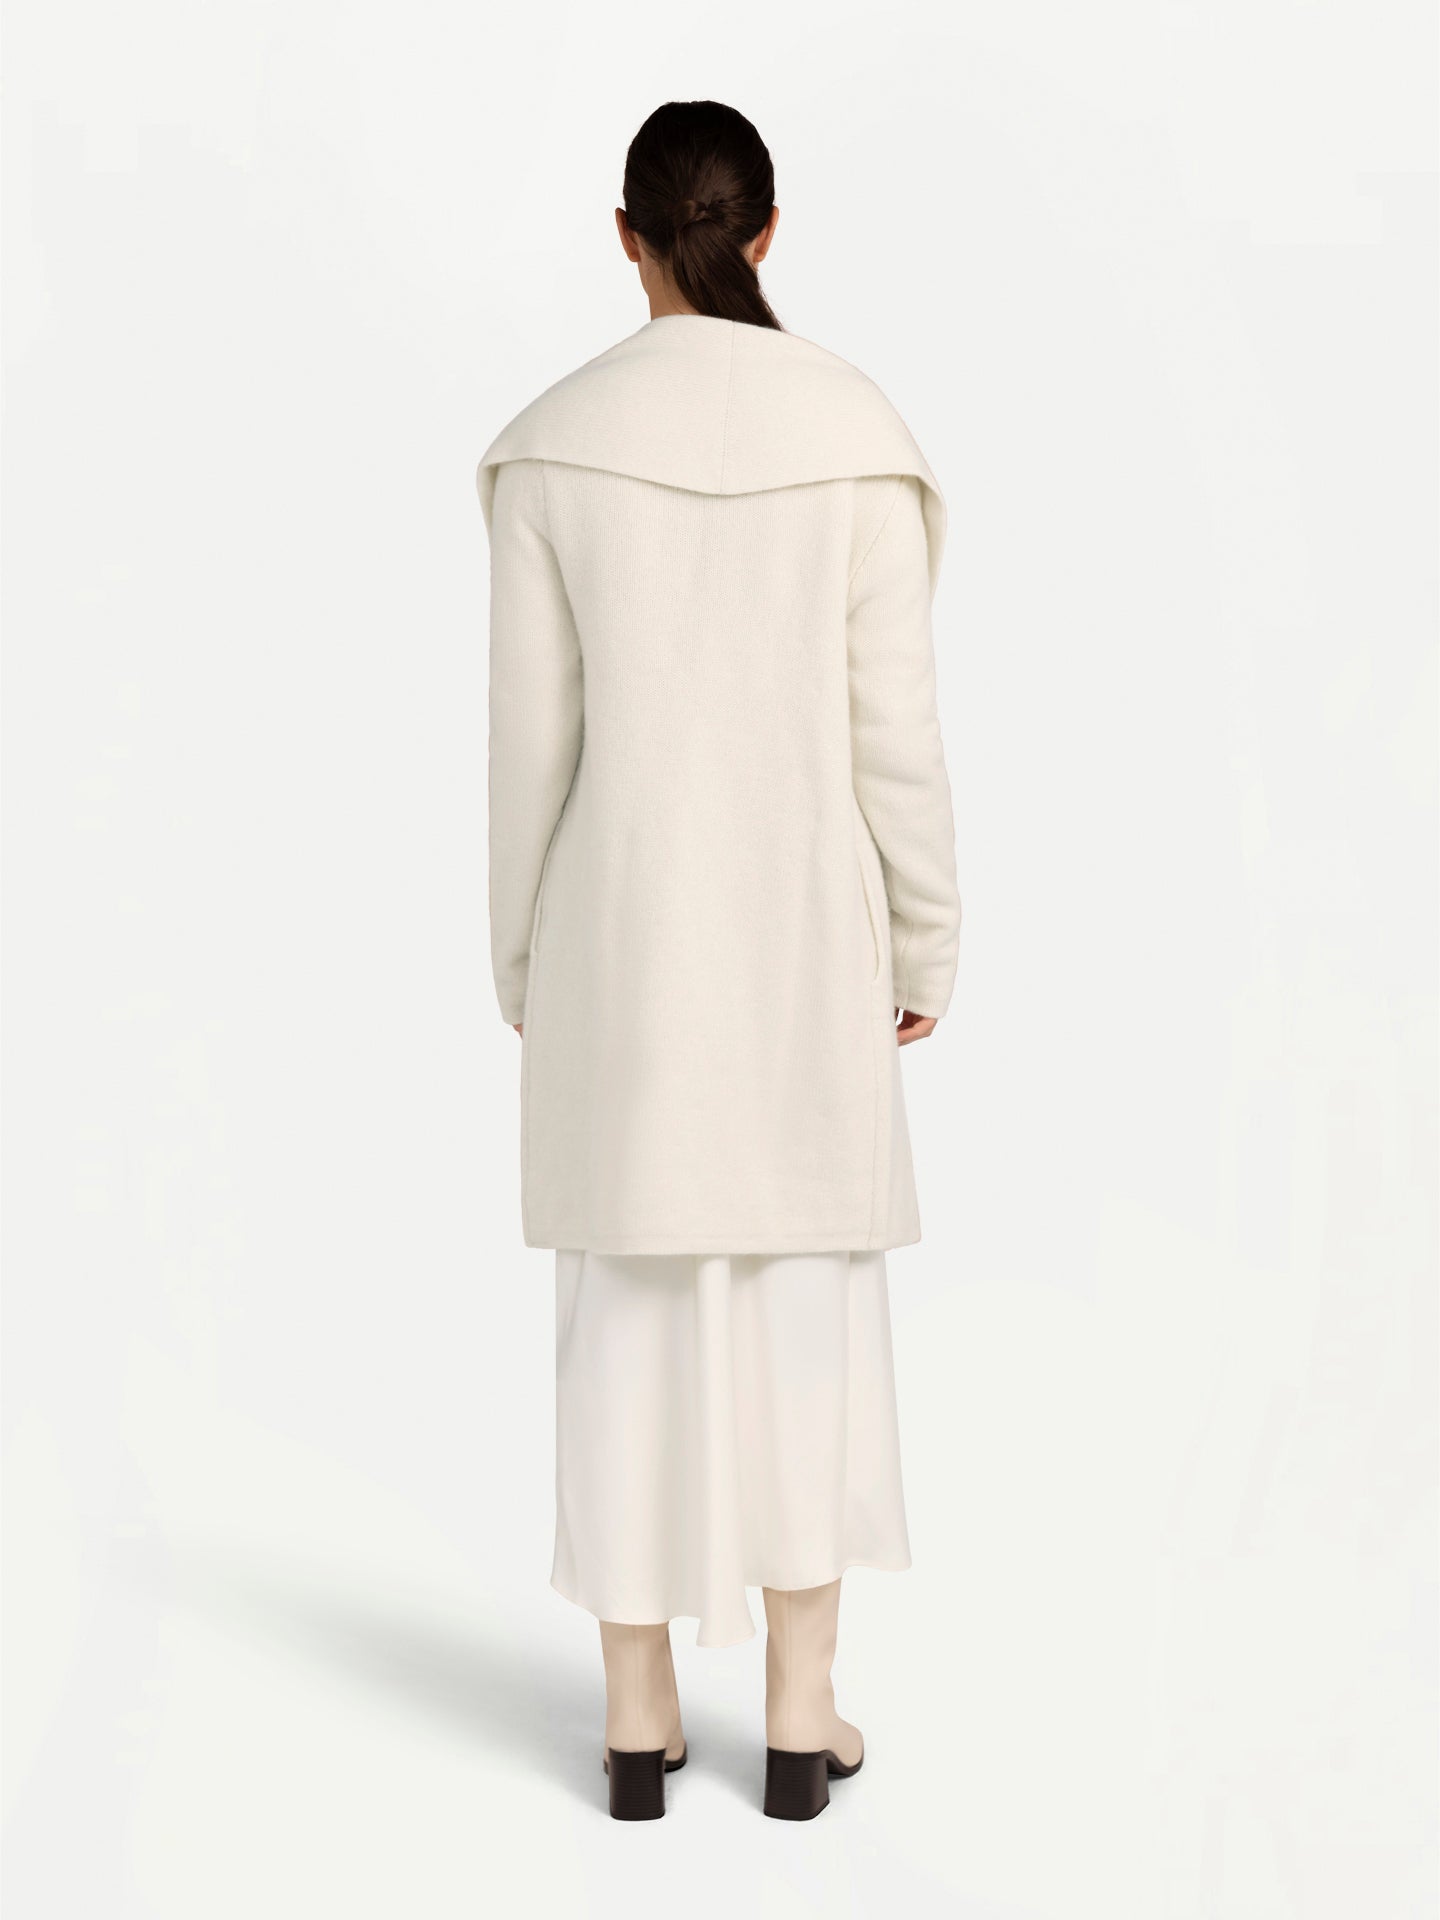 Women's Organic Colour Shawl Collar Cardigan Off White - Gobi Cashmere